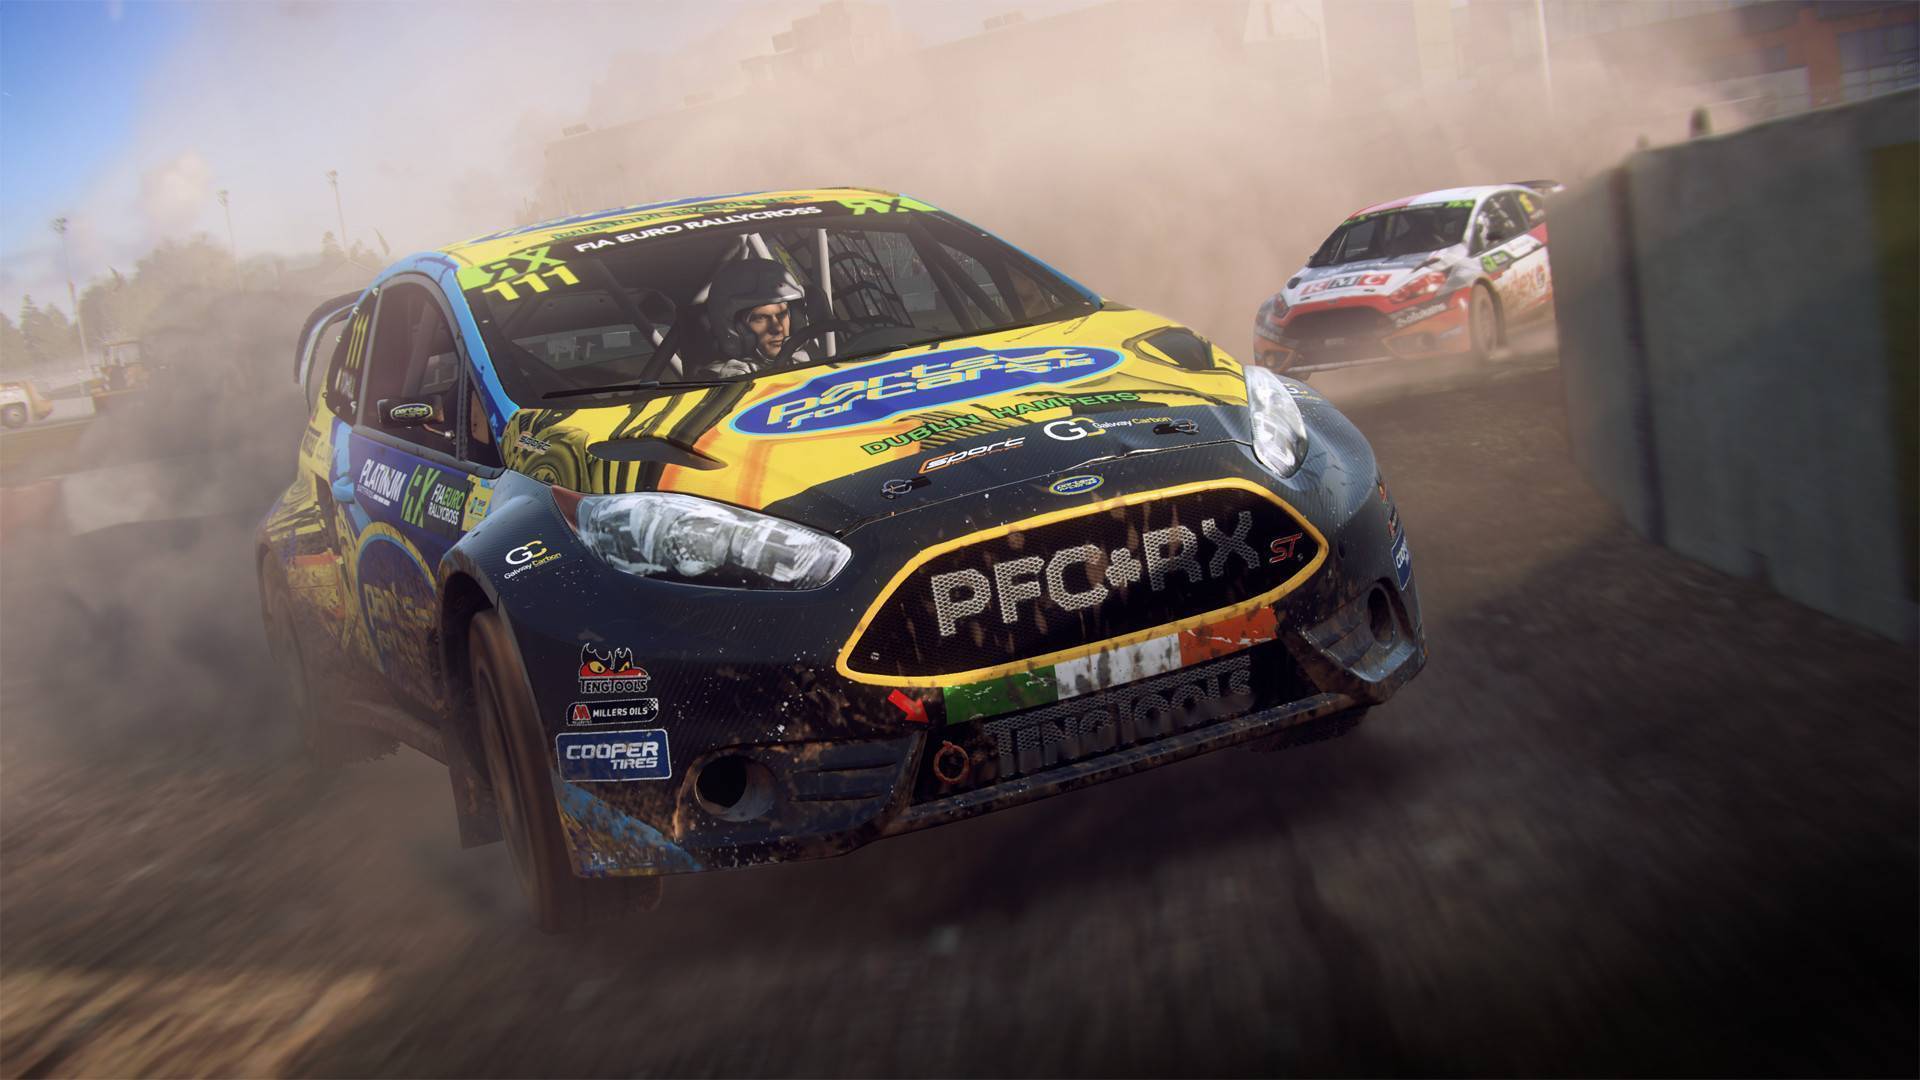 DiRT Rally 2.0 (PS4) günstig - Preis ab 7,91€